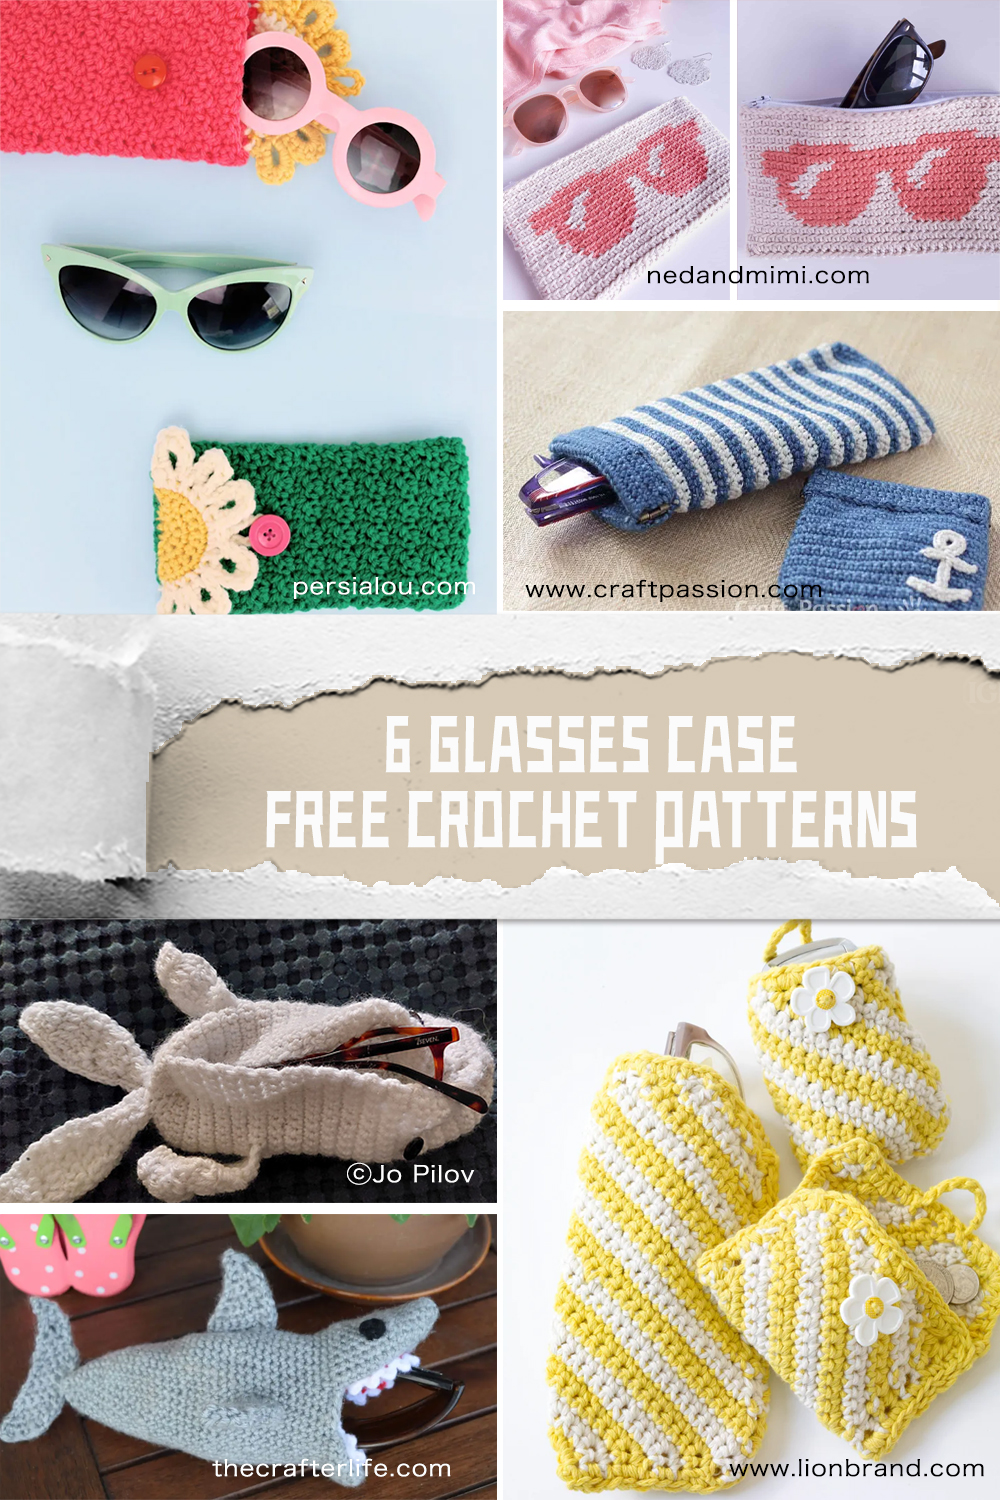 6 Crochet Glasses Case FREE Patterns